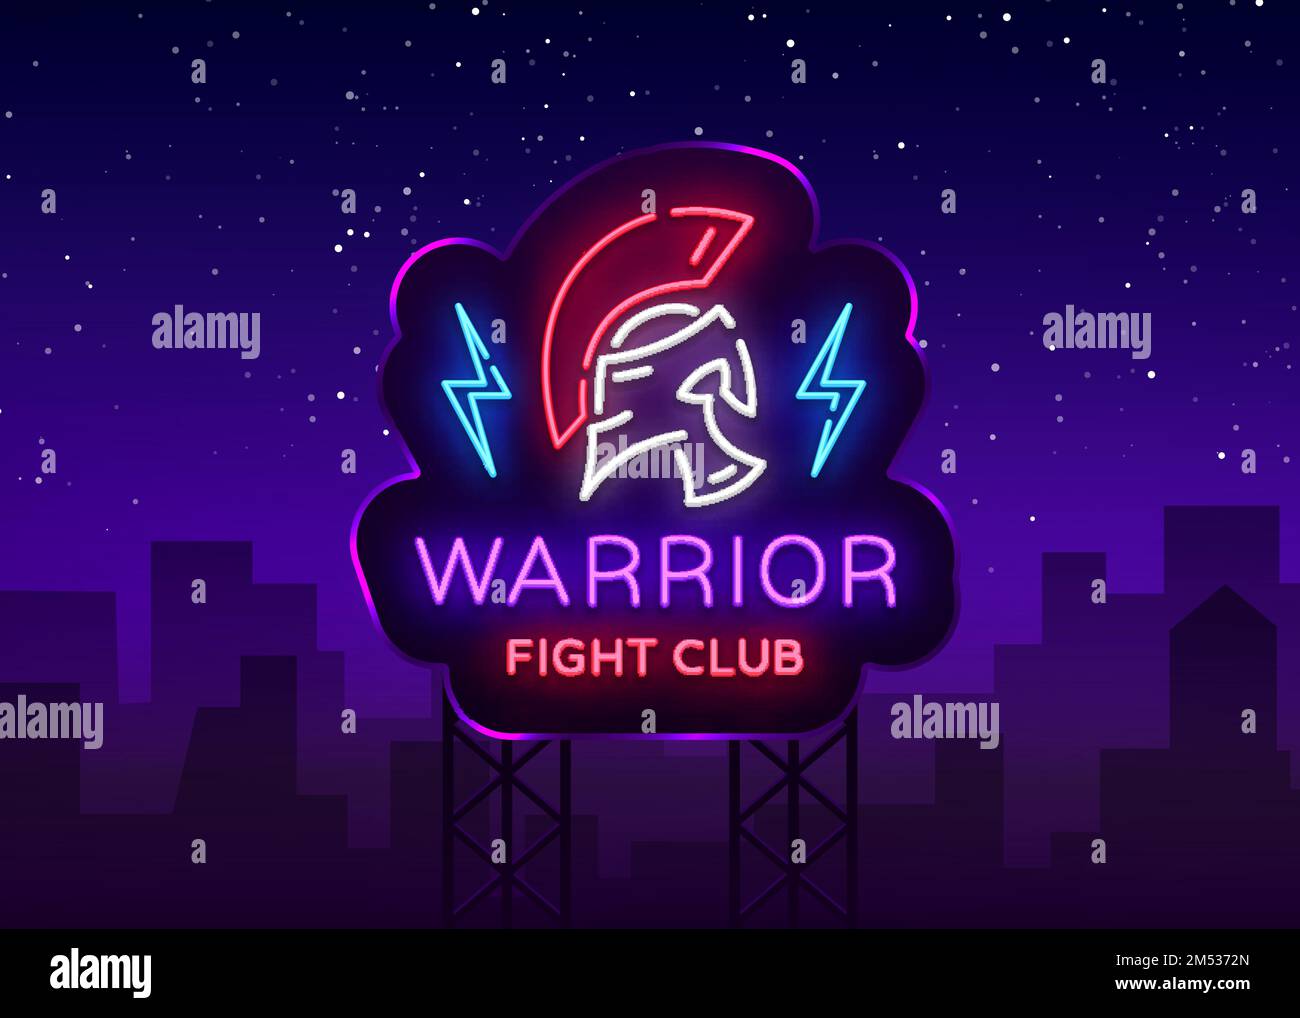 Fight Club neon sign. Warrior logo in neon style. Design template, sports logo, Spartan warrior. Night Fight, Martial Arts, MMA. Light banner, bright Stock Vector